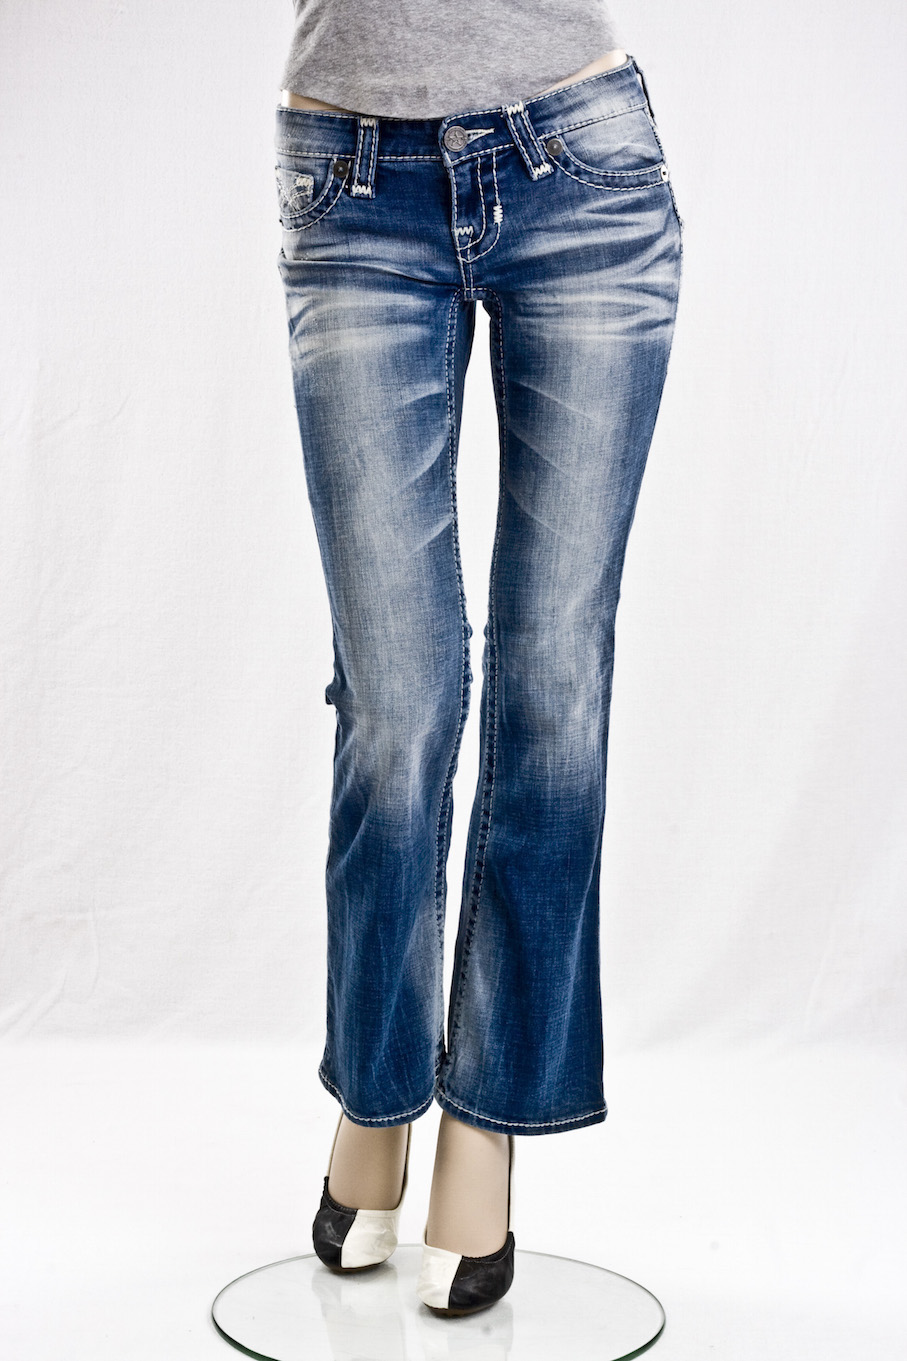 Женские джинсы Big Star "Буткат" Sweet flare bootcut jean интернет-магазин Fashion Jeans